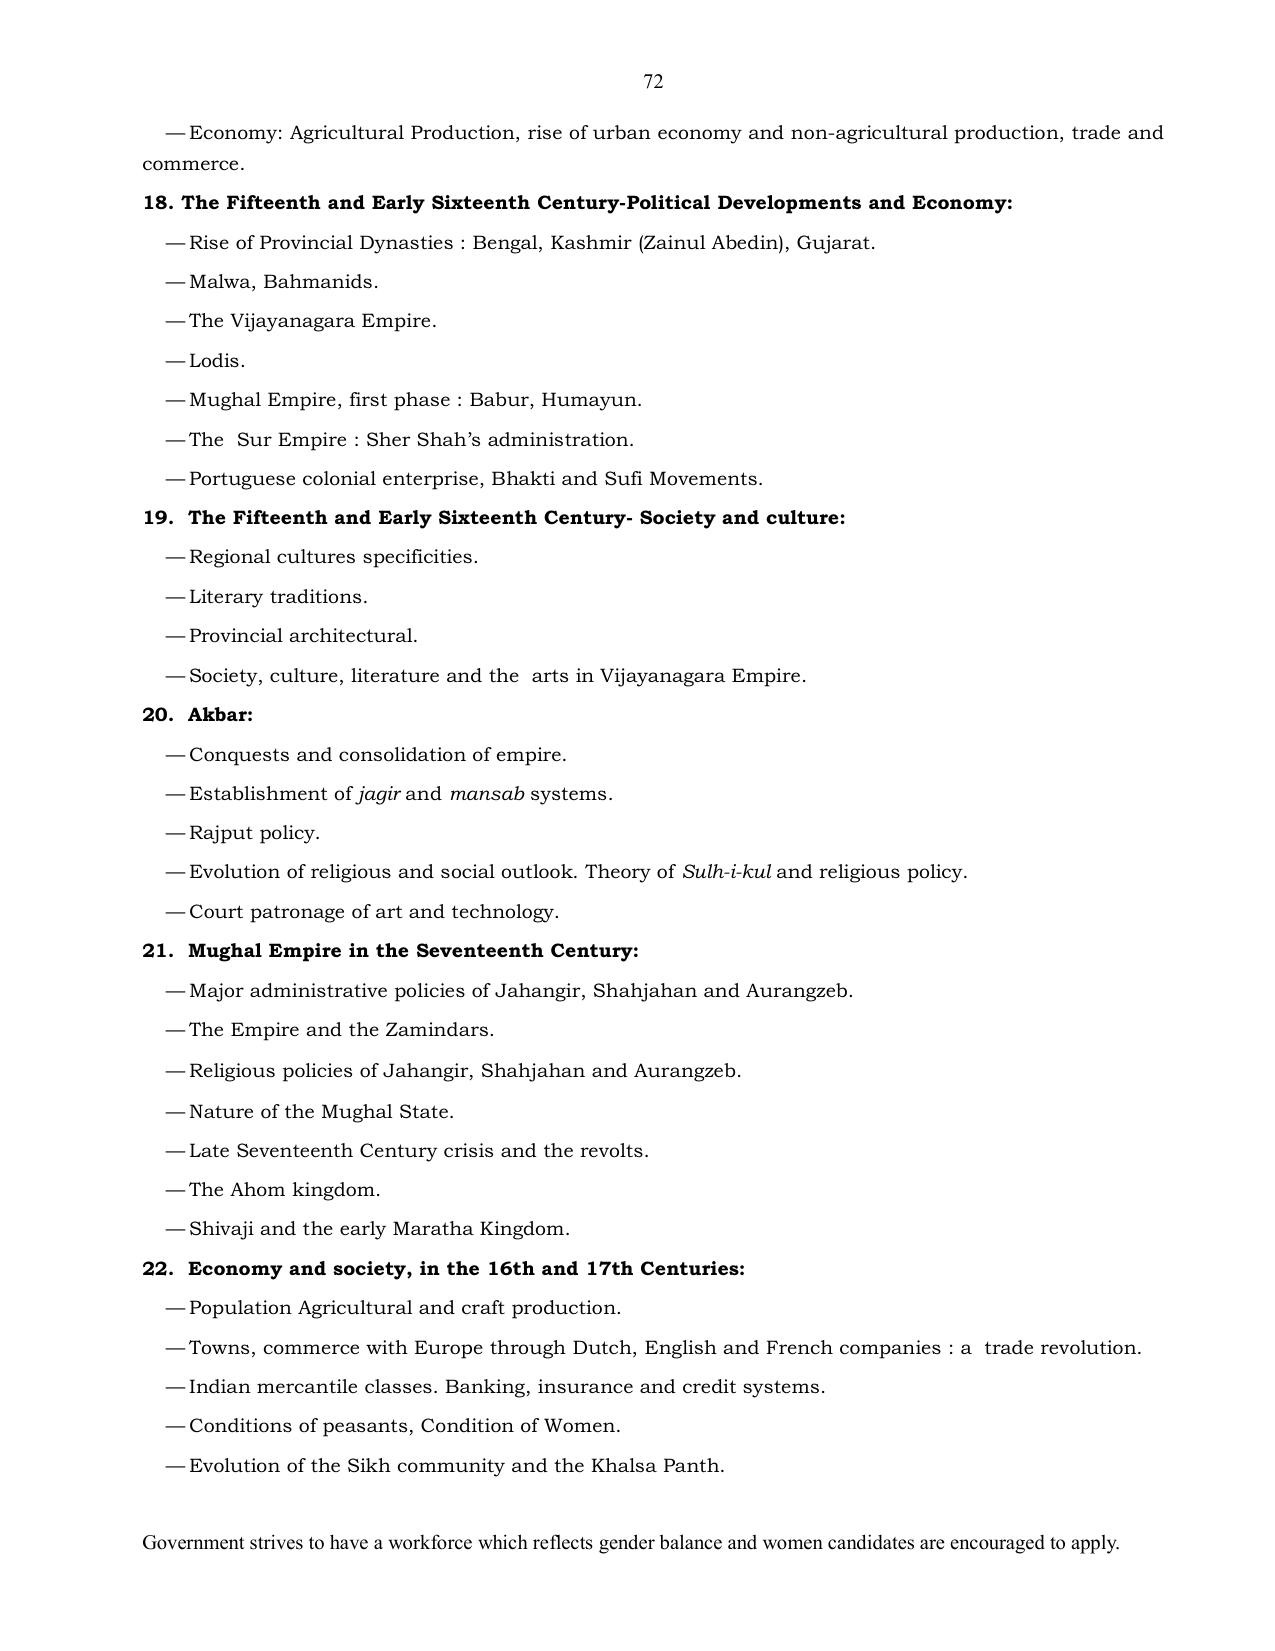 UPSC Syllabus Prelims & Mains Pdf Link - Page 48